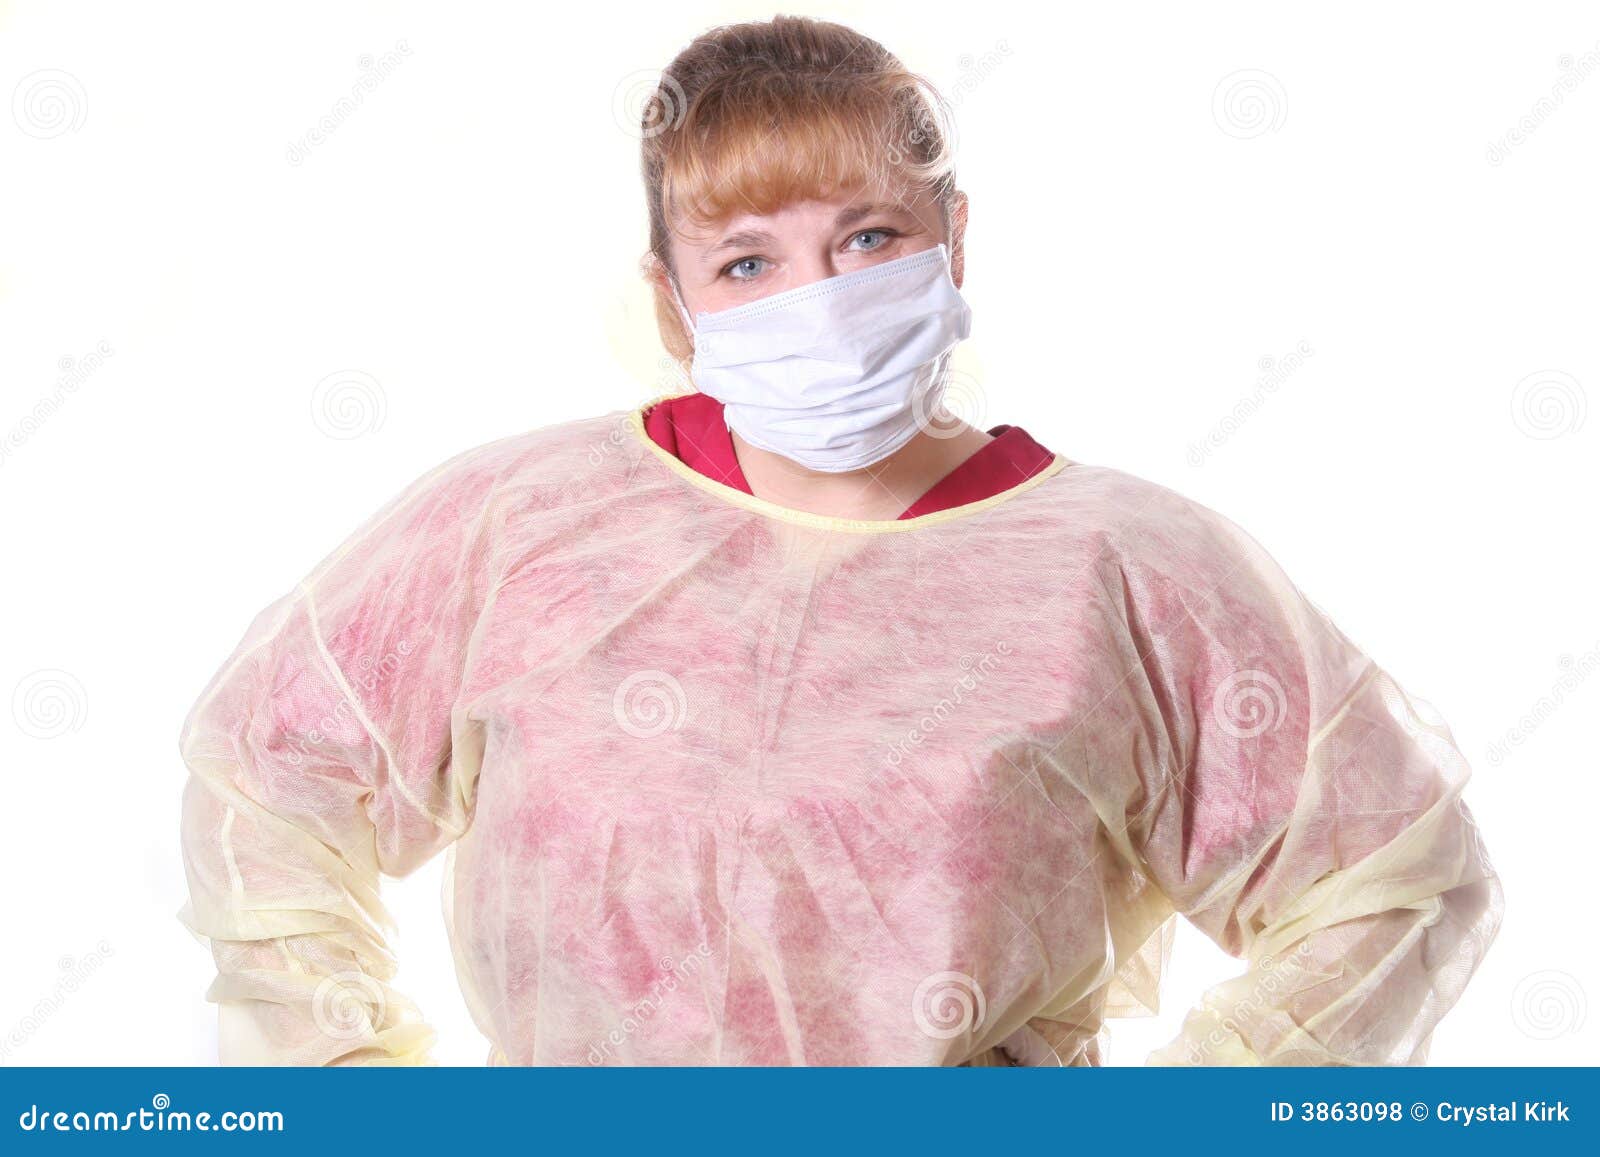 Nurse with face mask stock photo. Image of body, single - 3863098